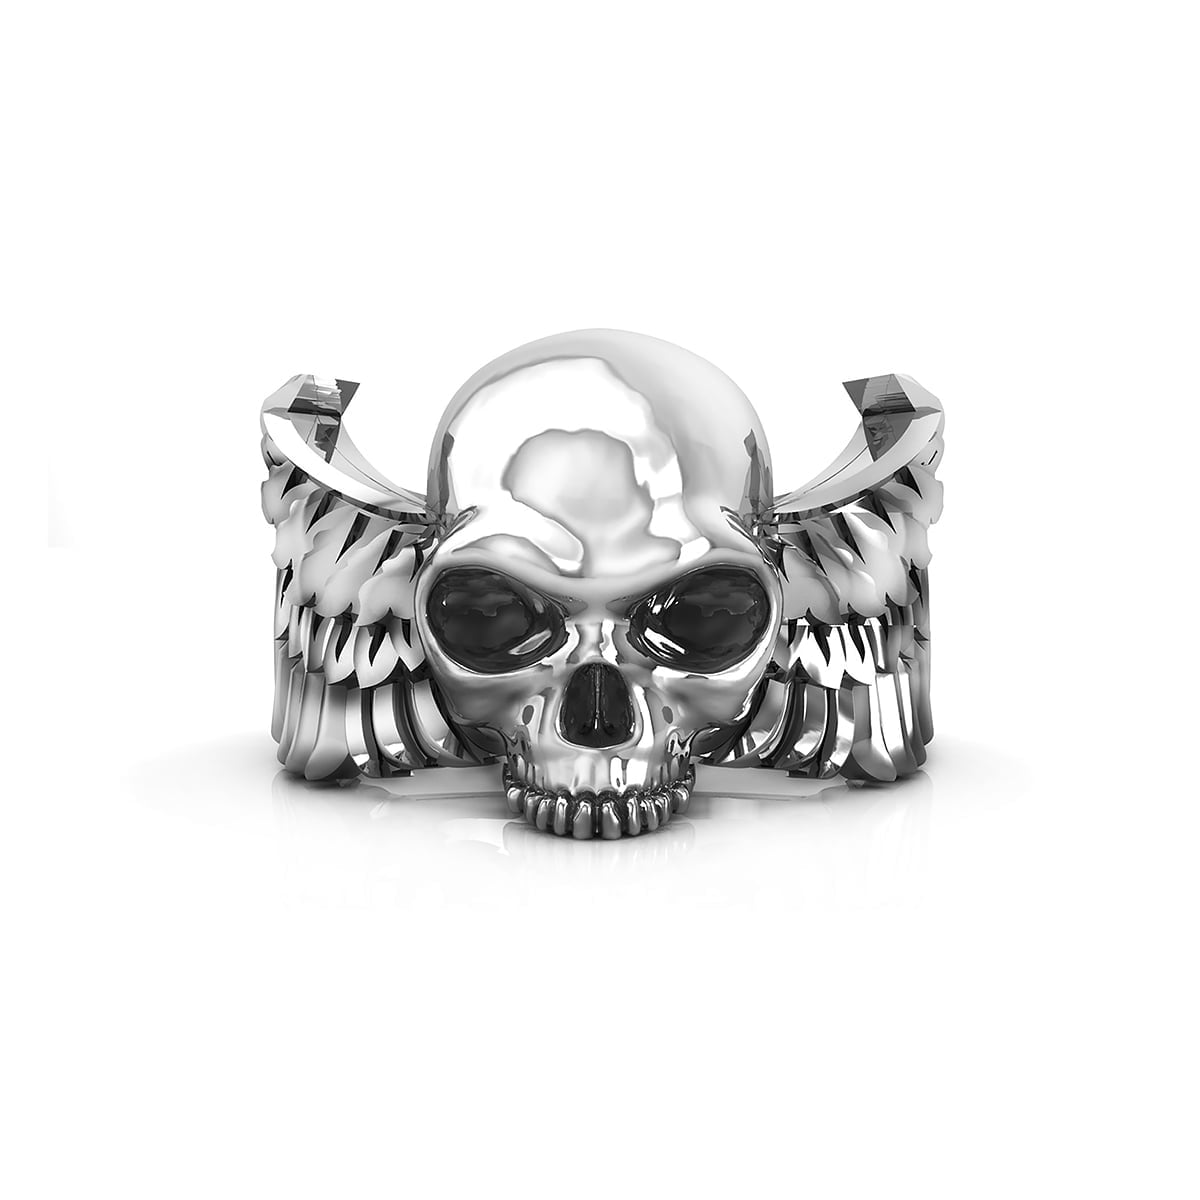 Men Or Women's Winged Skull Gothic Punk Biker Handmade Halloween Ring For Exclusive Gift